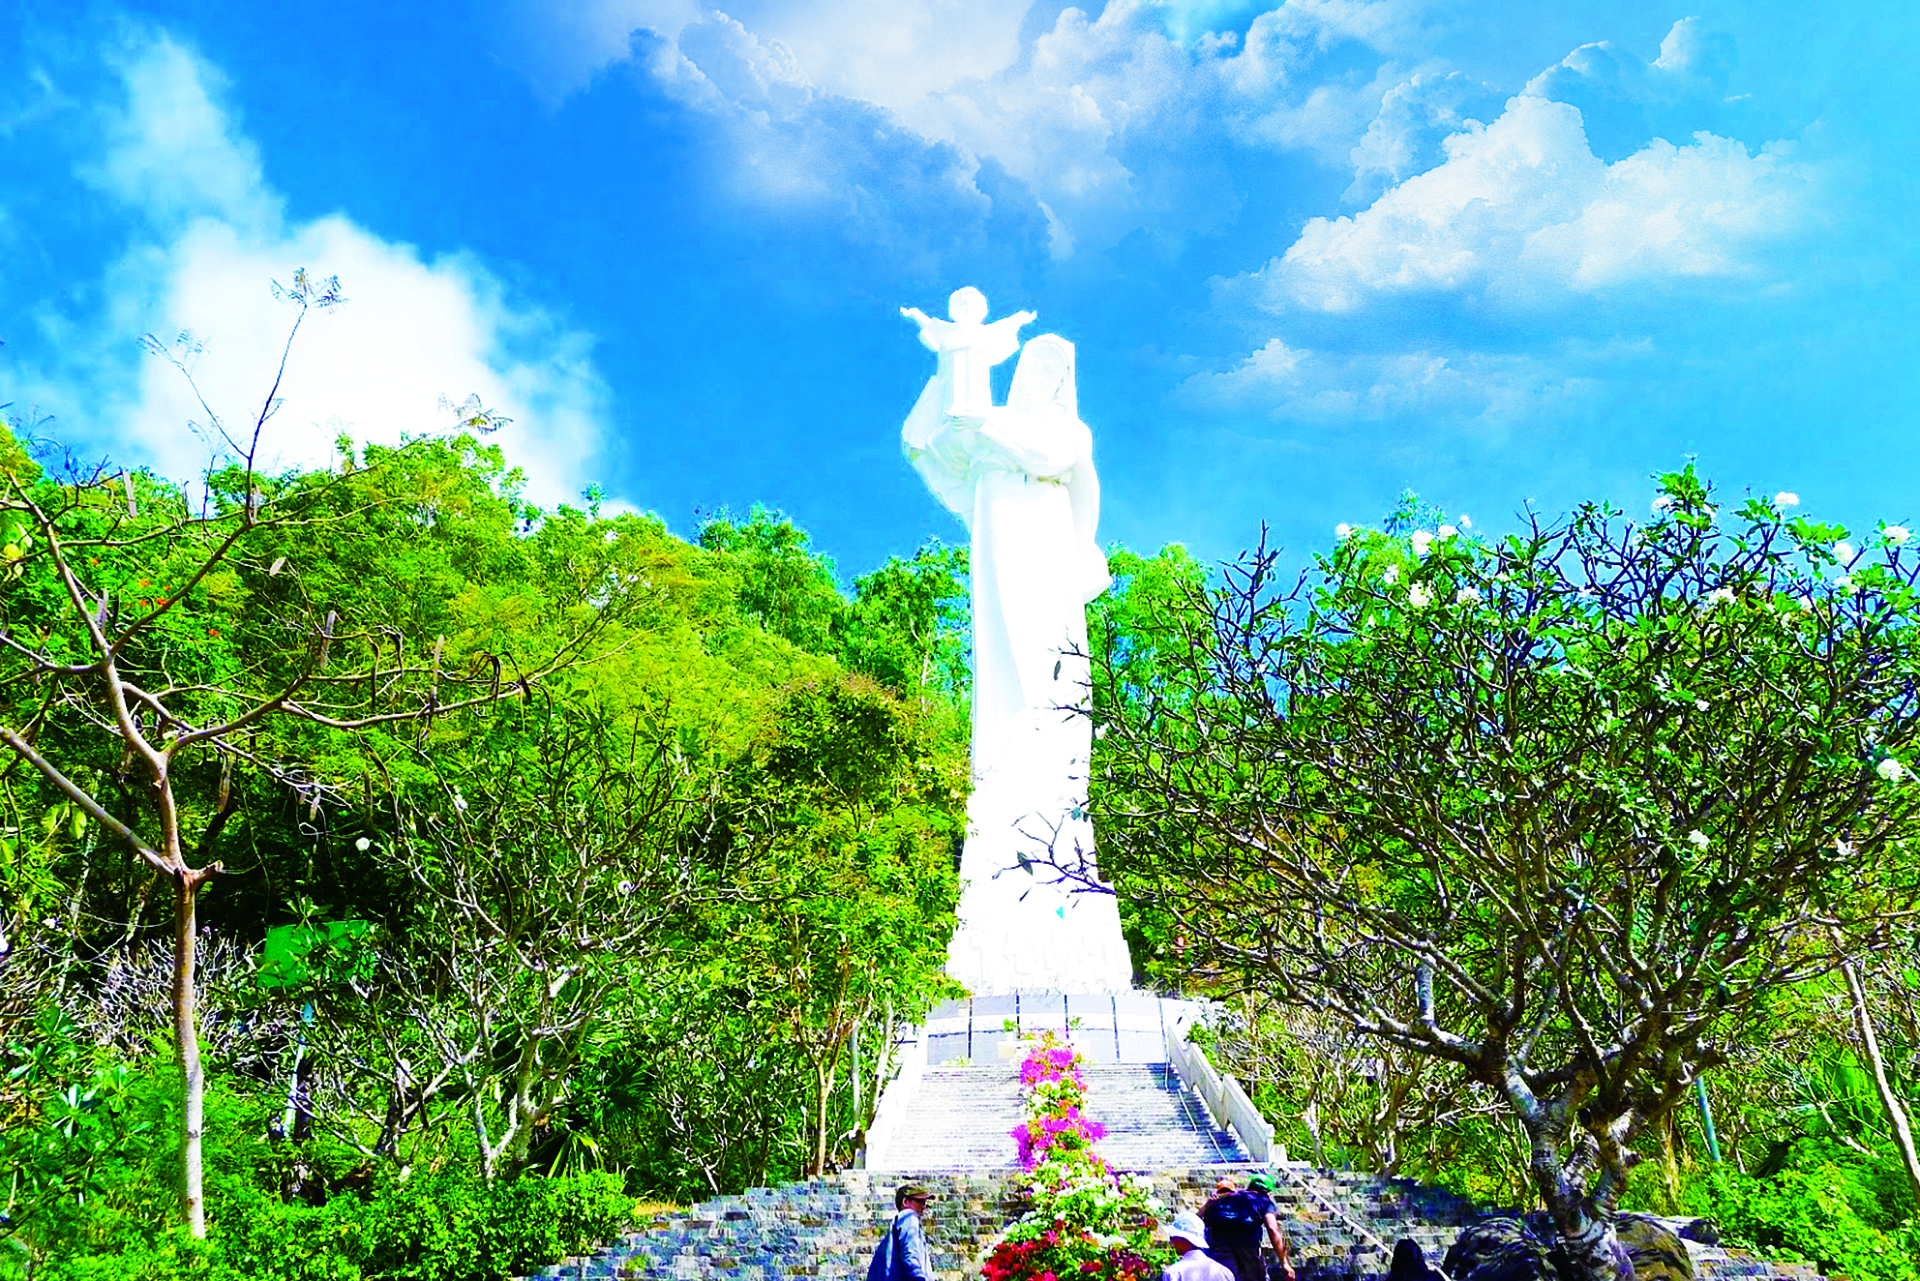 11.	Our Lady of Bai Dau